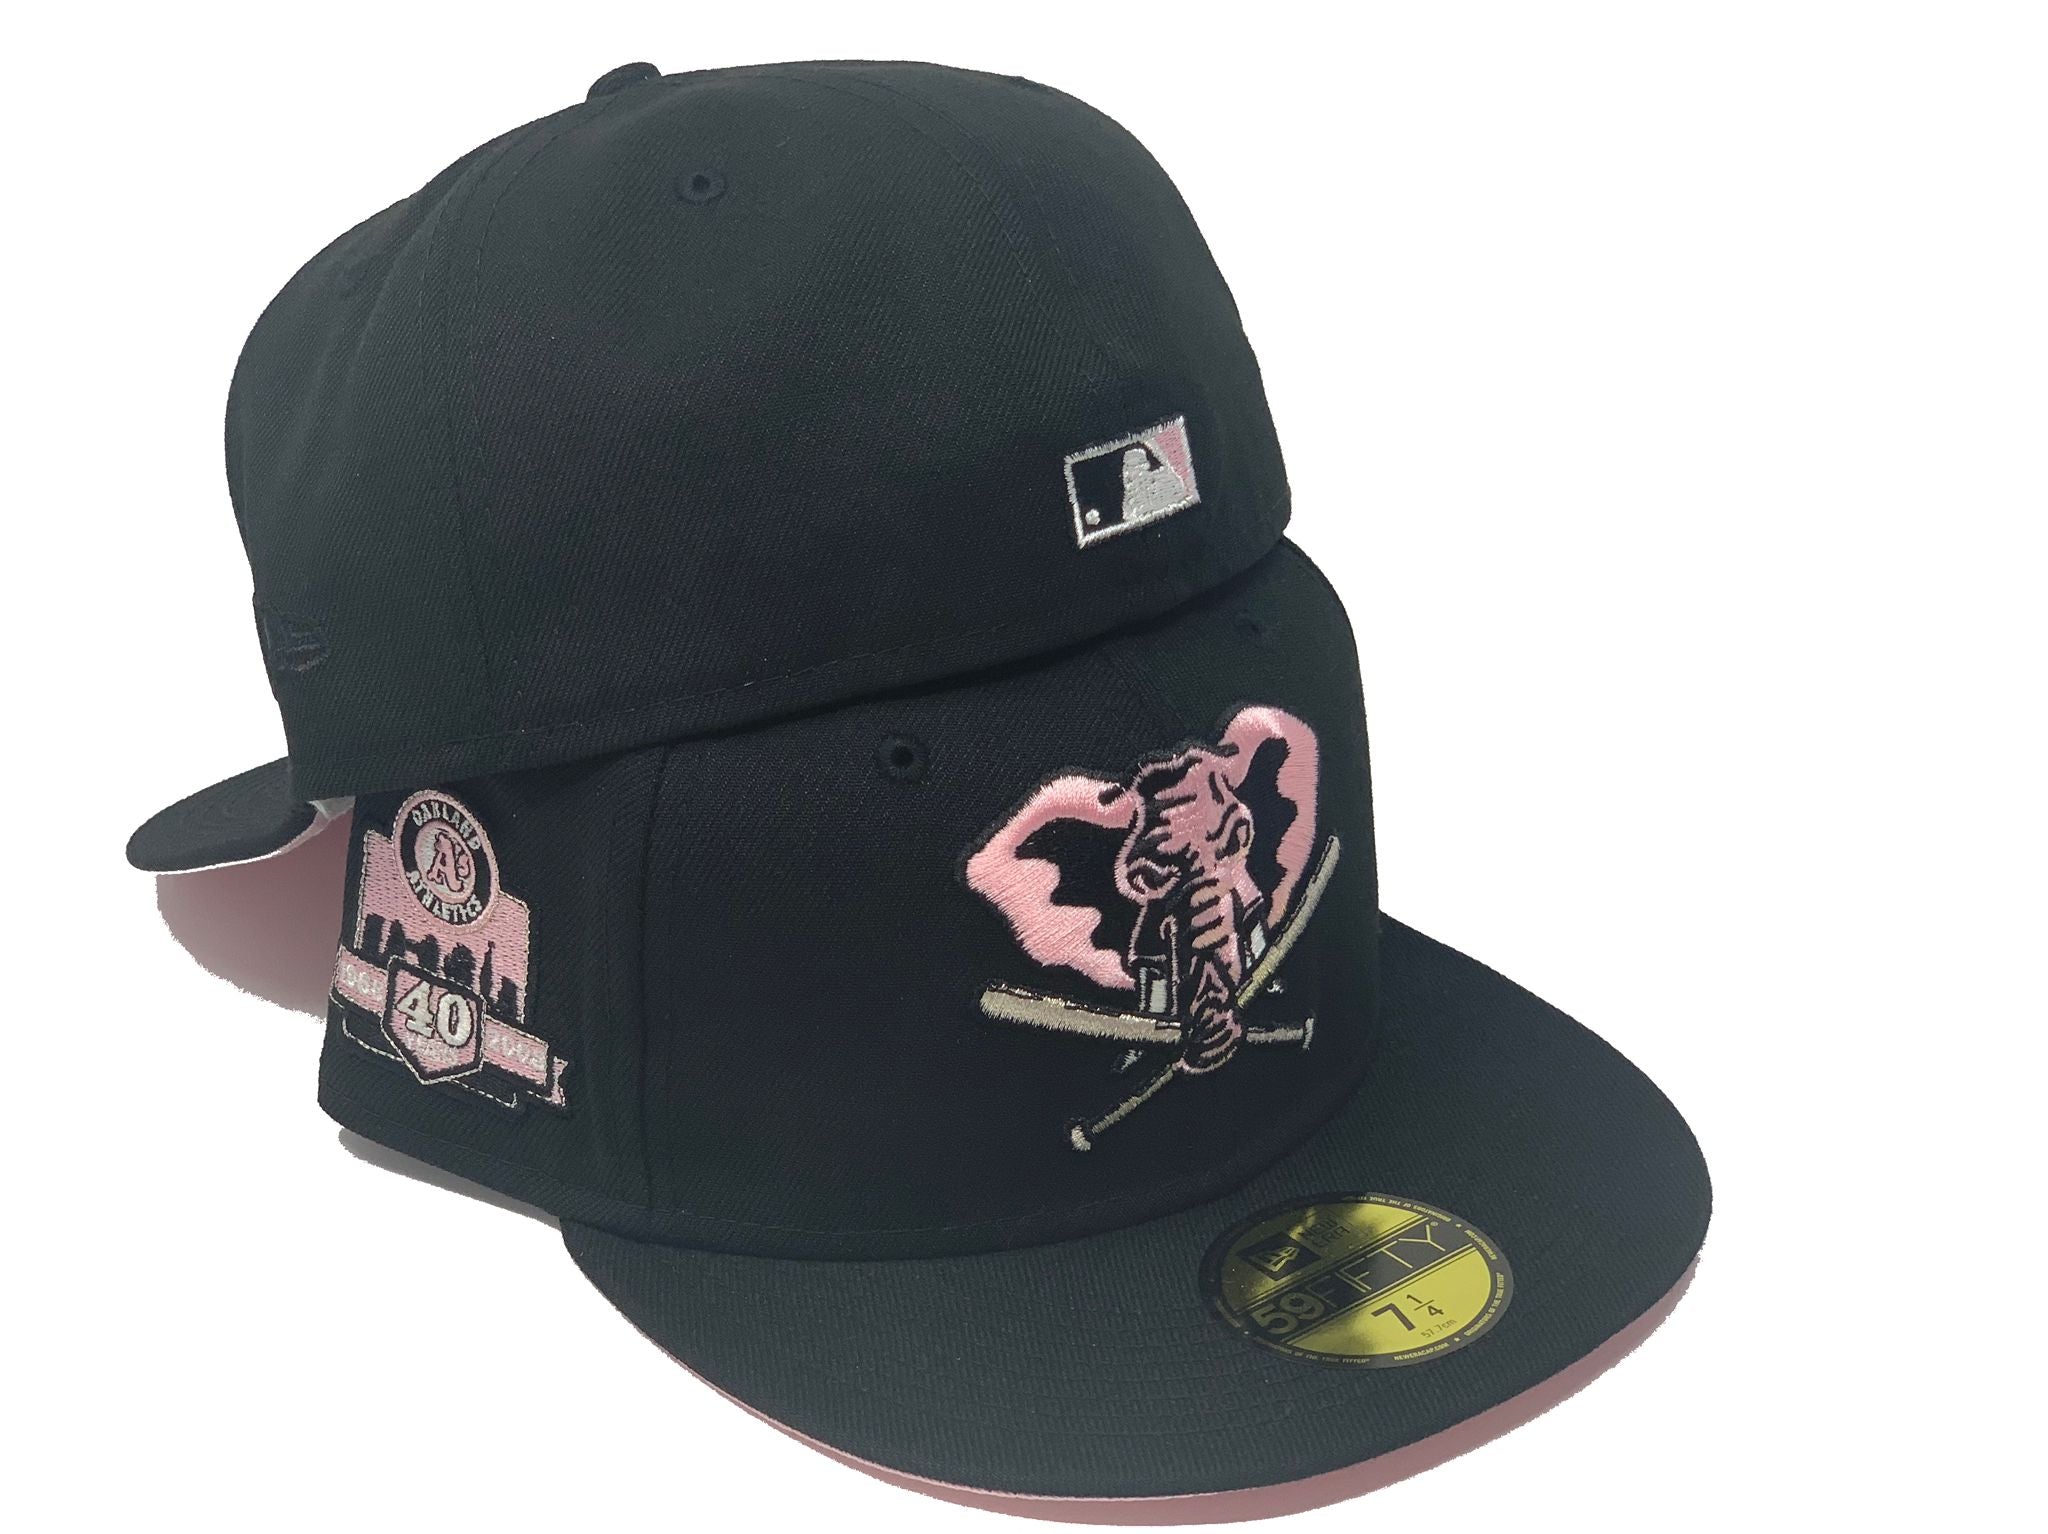 Oakland Athletics A's Hat Cap Elephant Bats Stomper Spell Out